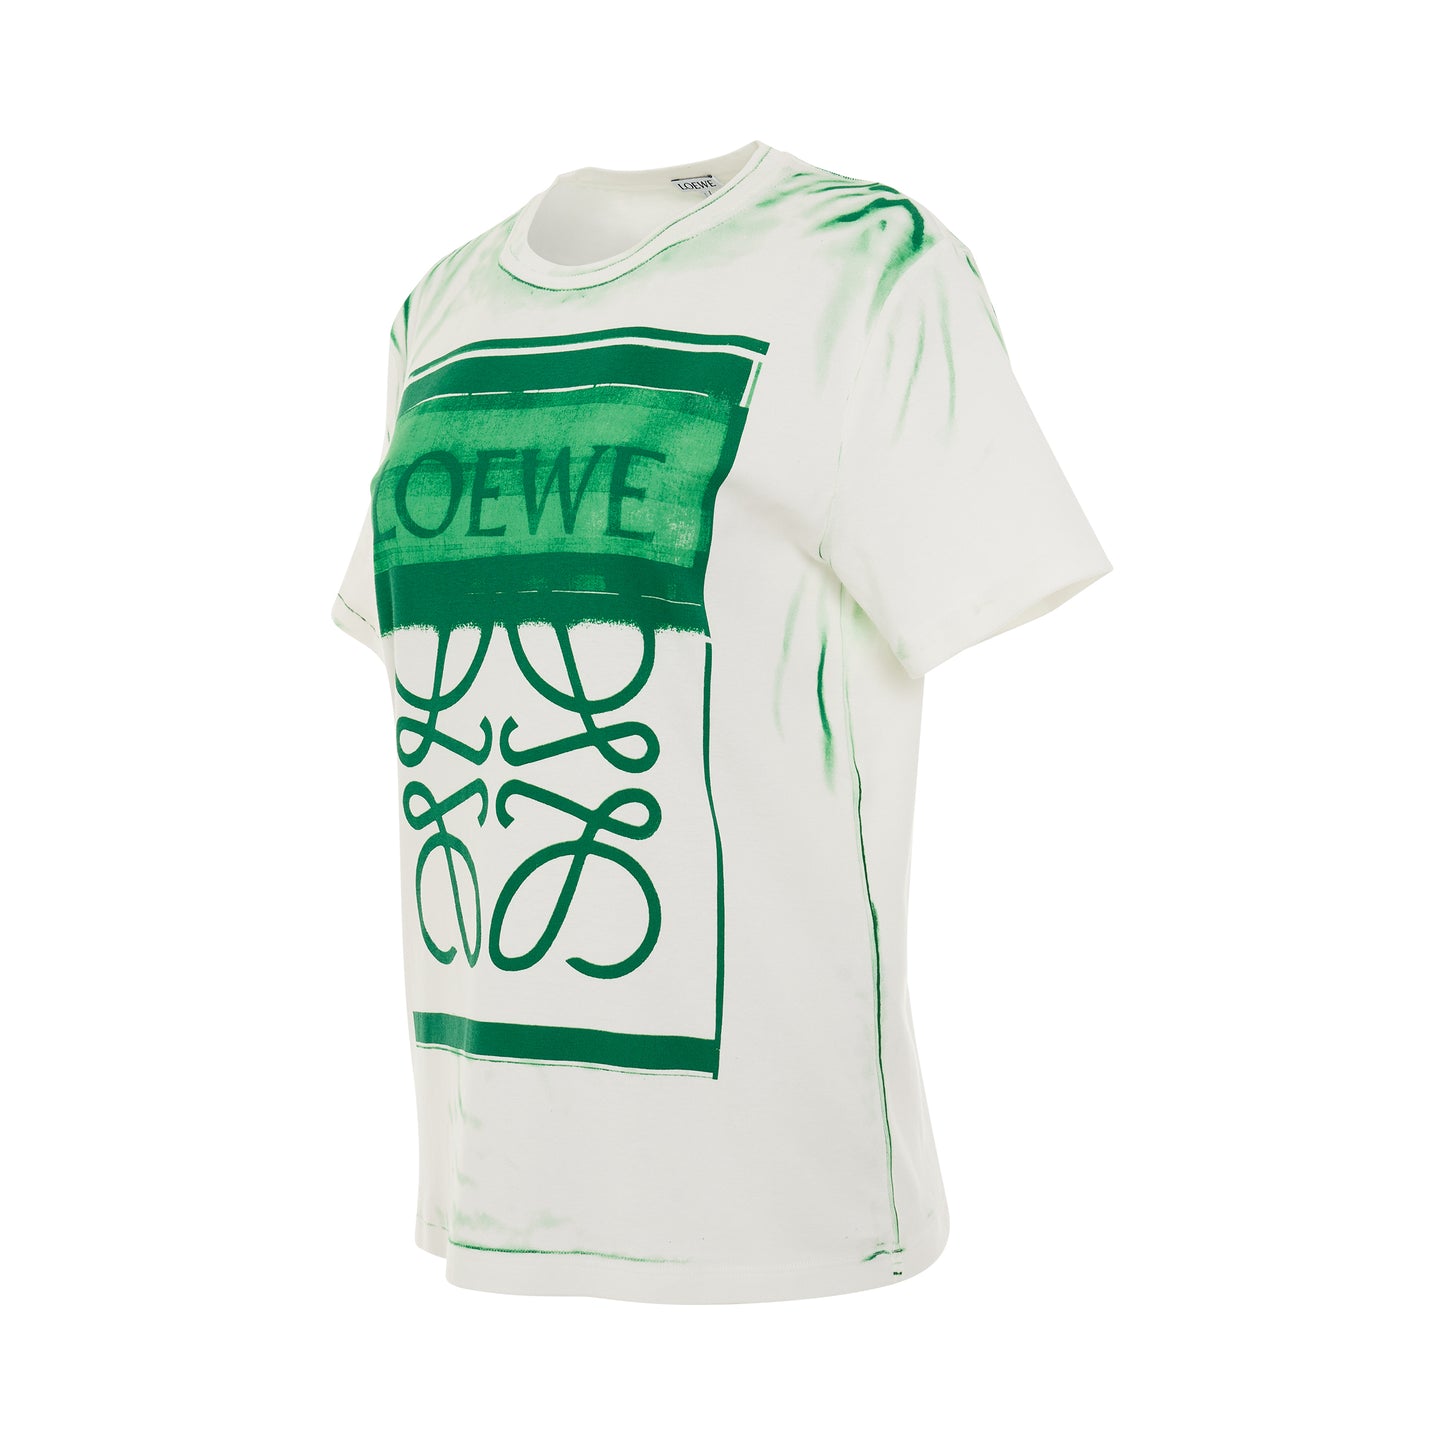 Anagram Print T-Shirt in White/Green